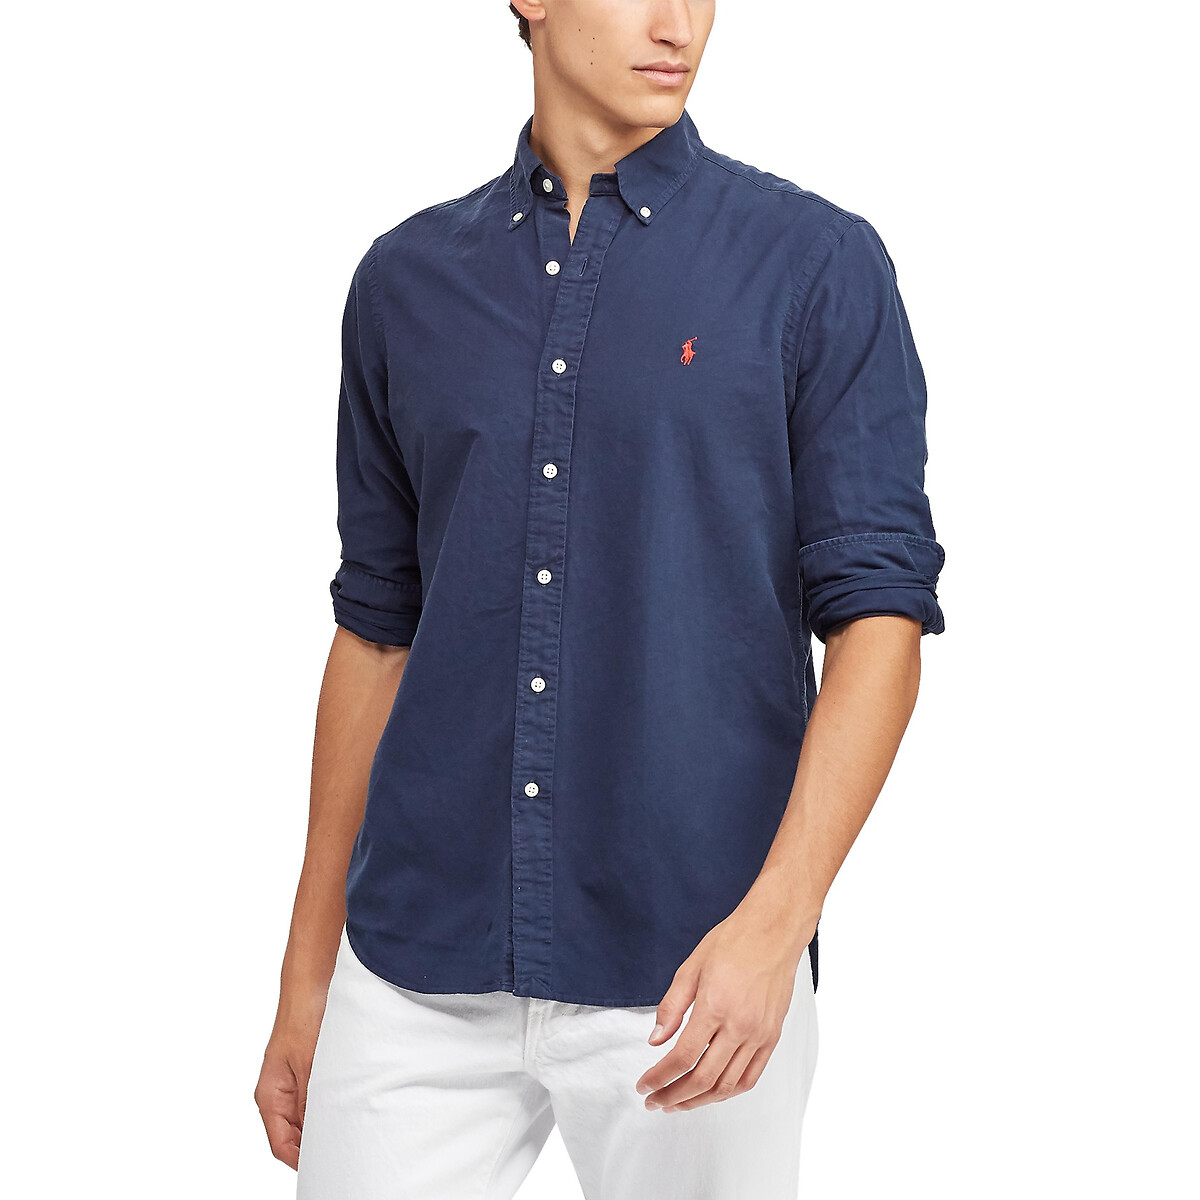 Oxford cotton shirt in slim fit , navy blue, Polo Ralph Lauren | La Redoute